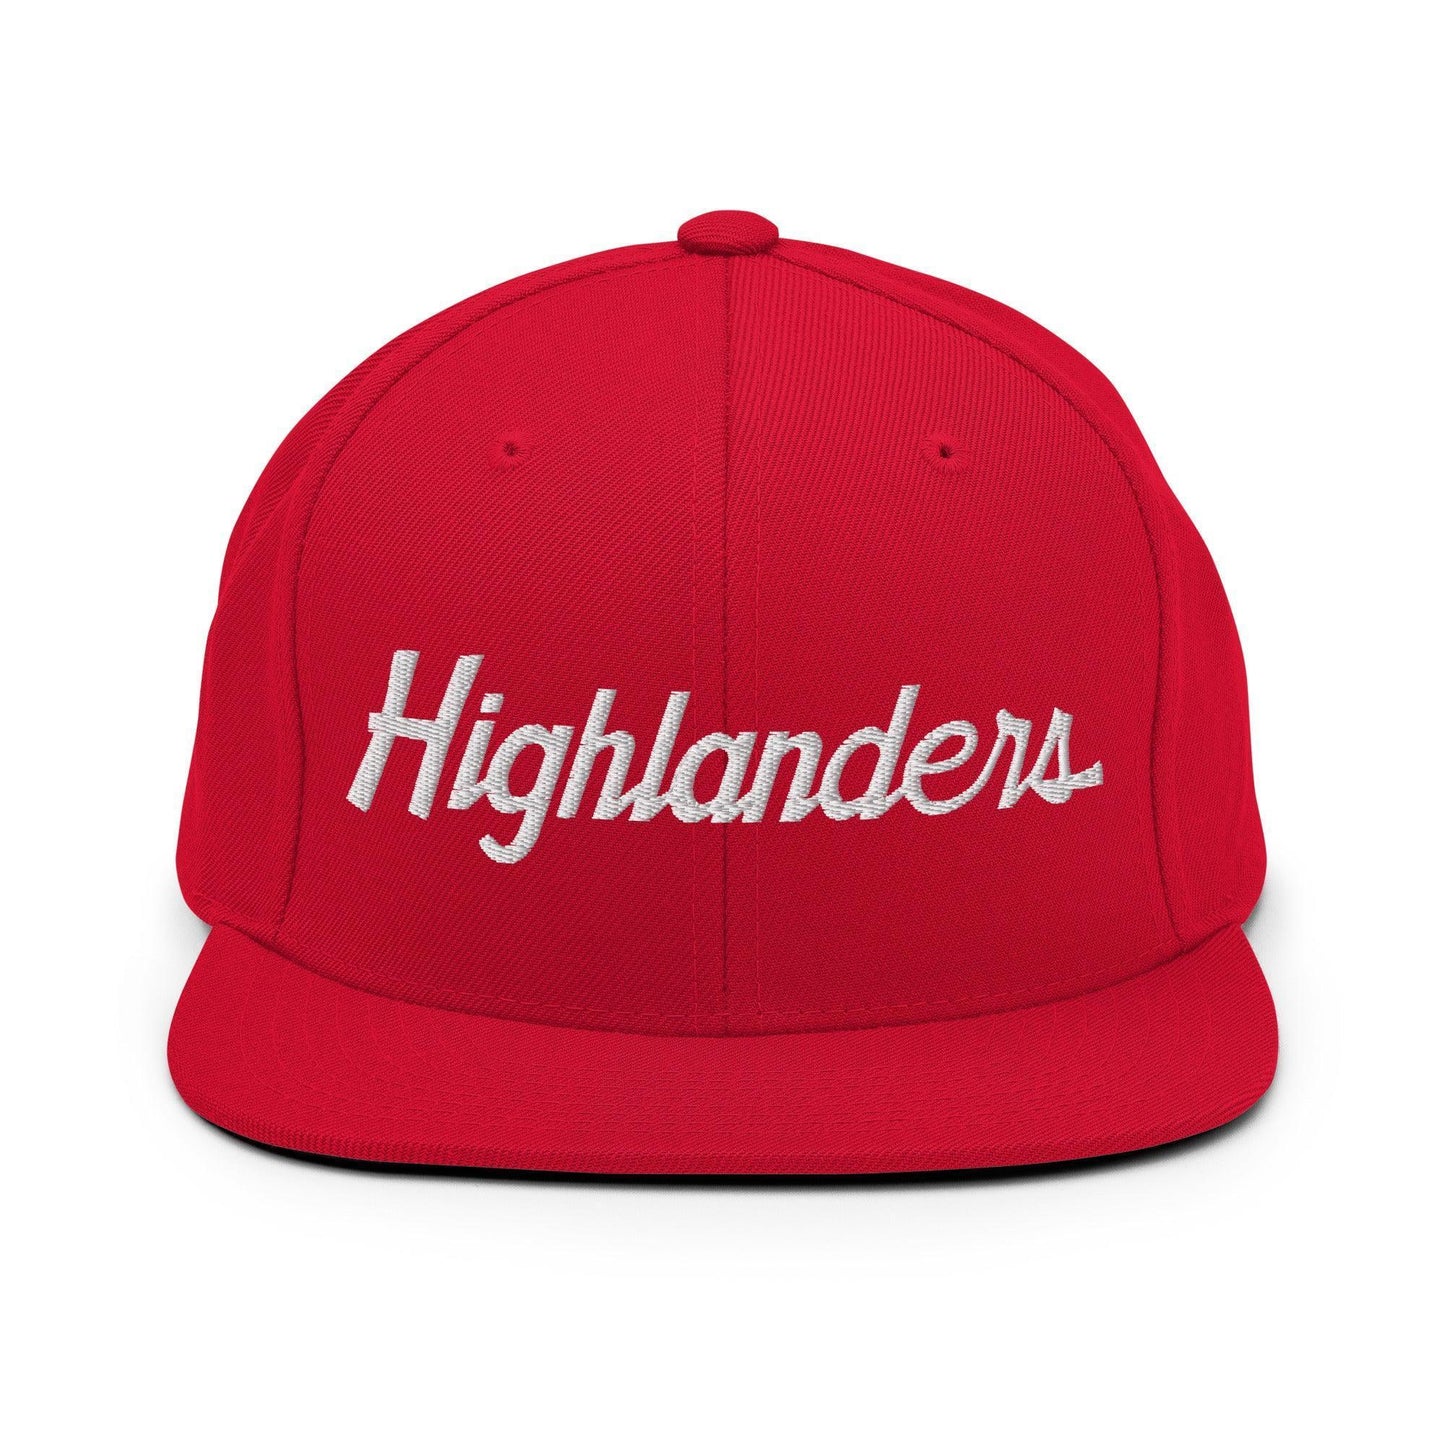 Highlanders School Mascot Script Snapback Hat Red